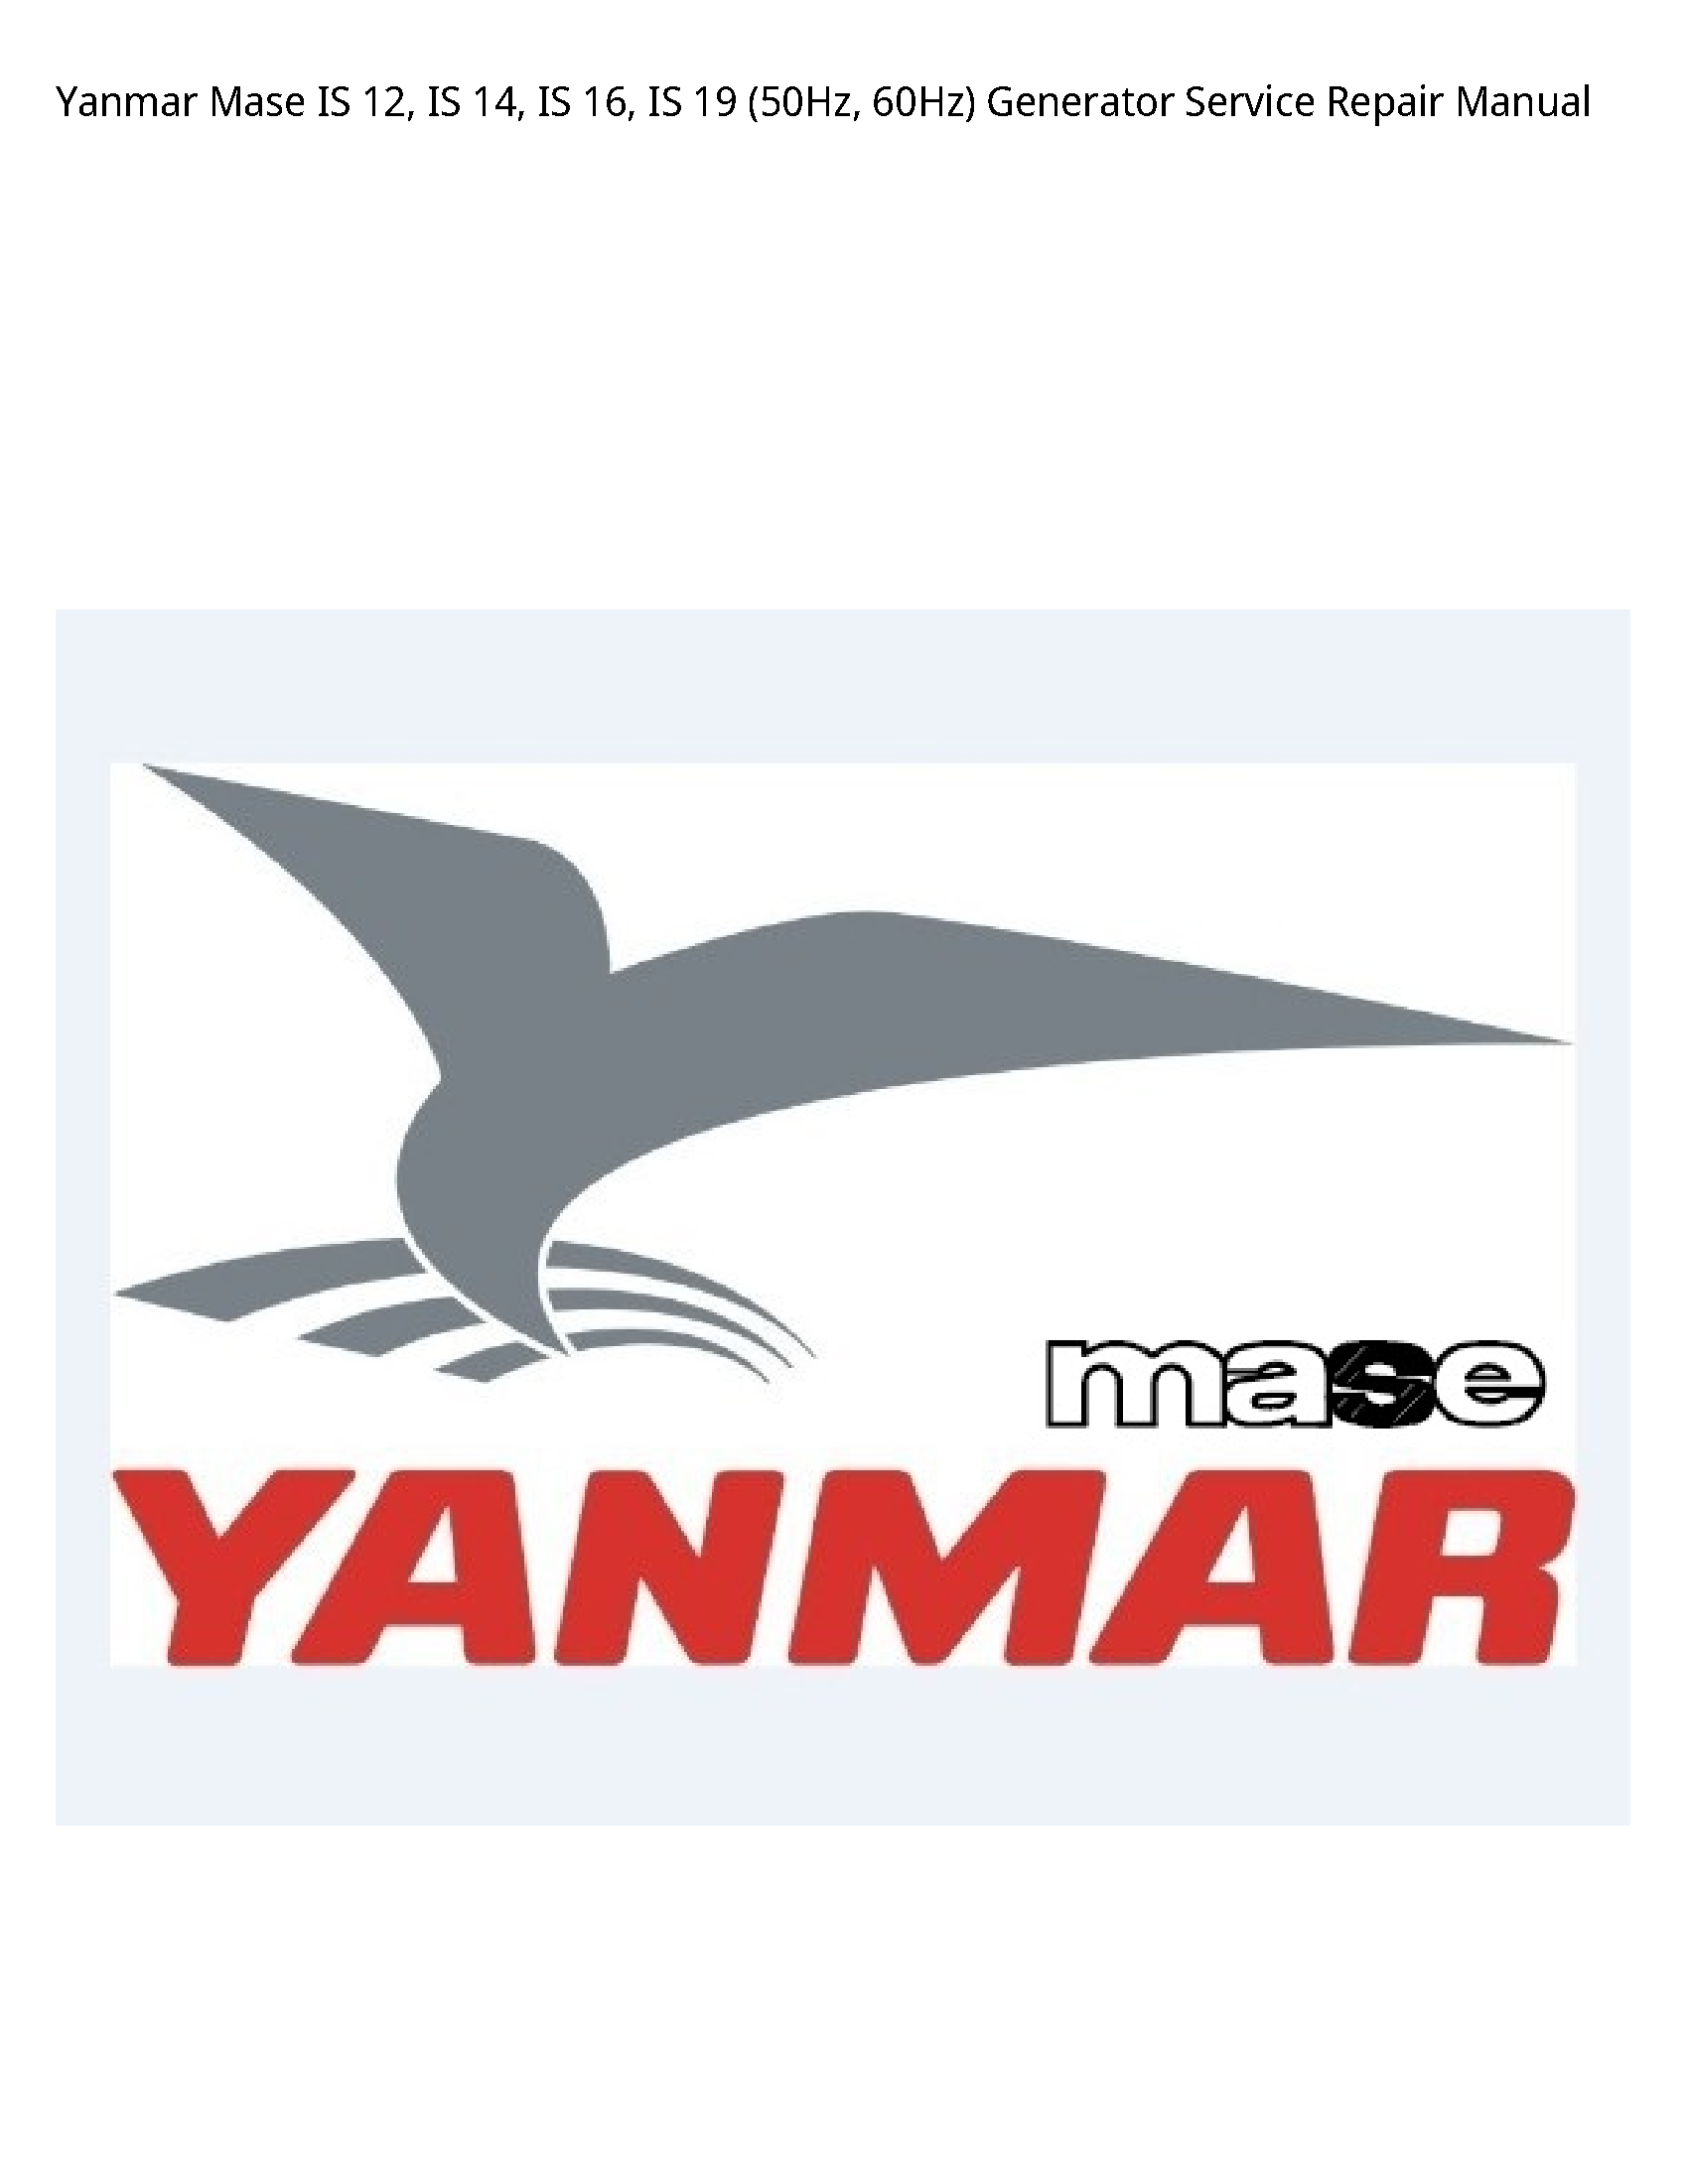 Yanmar 12 Mase IS IS IS IS Generator manual